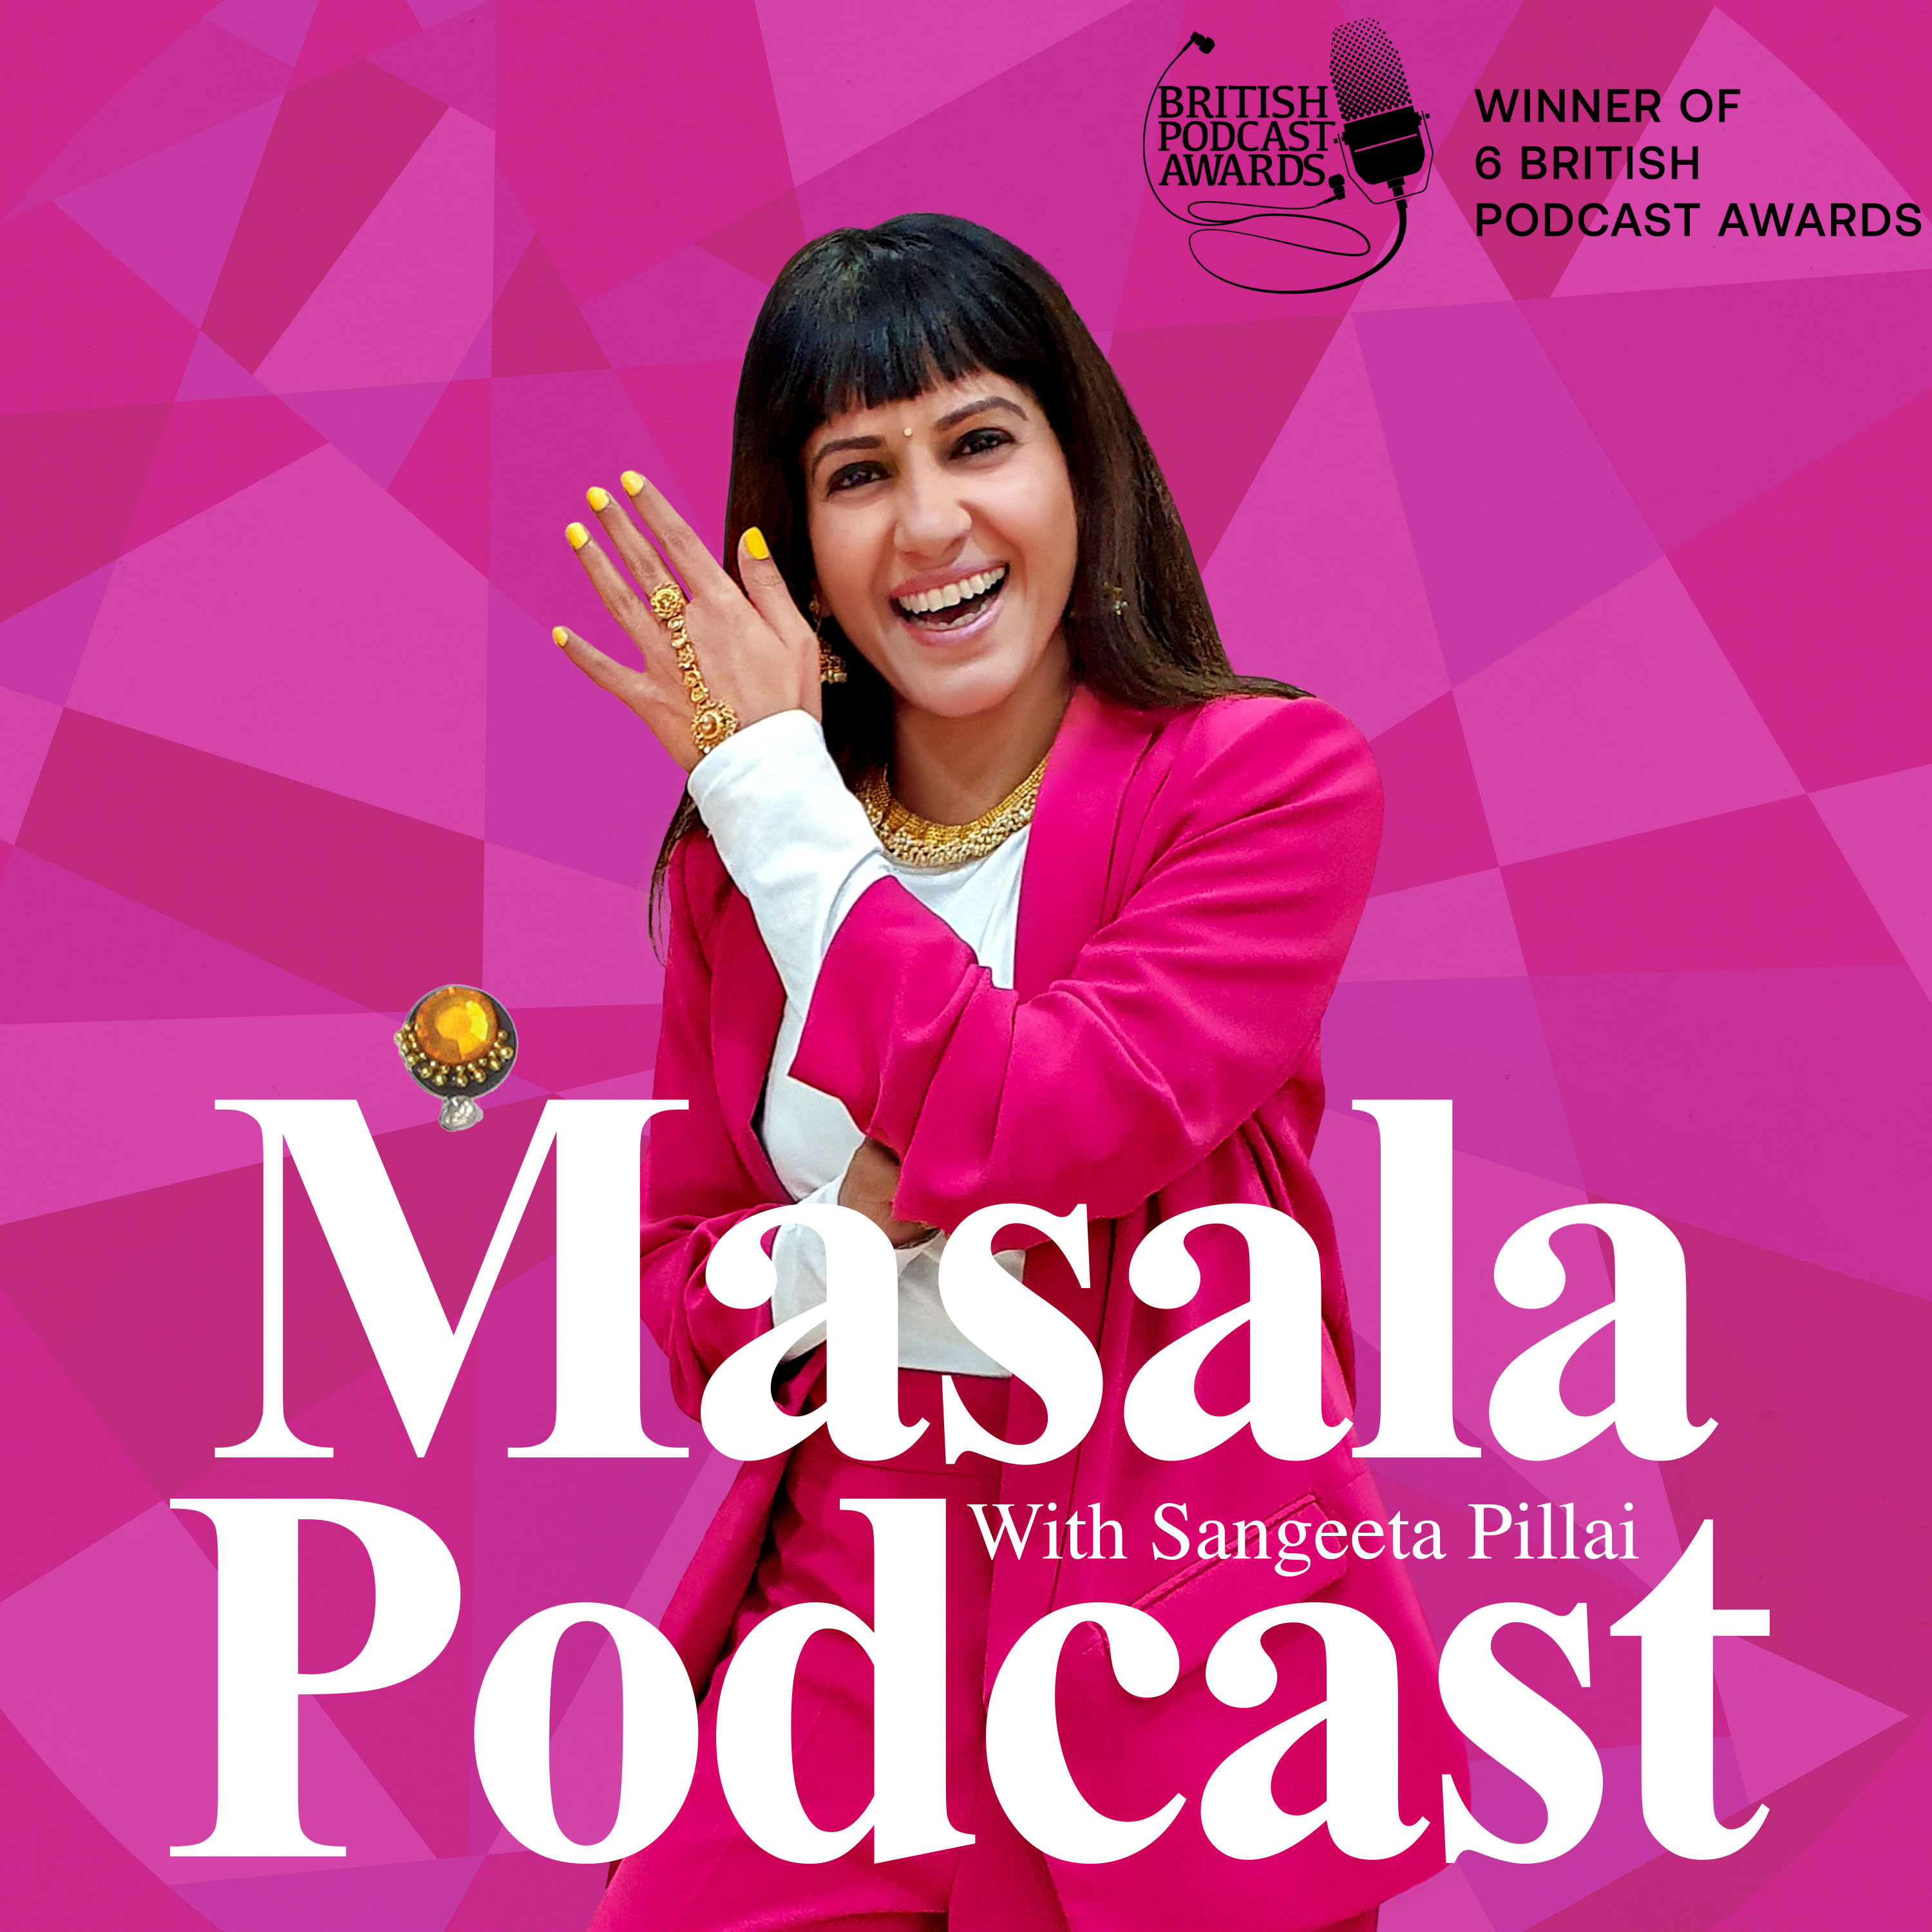 S5 Ep 12 Sangeeta Pillai: Why I became a South Asian feminist & podcaster